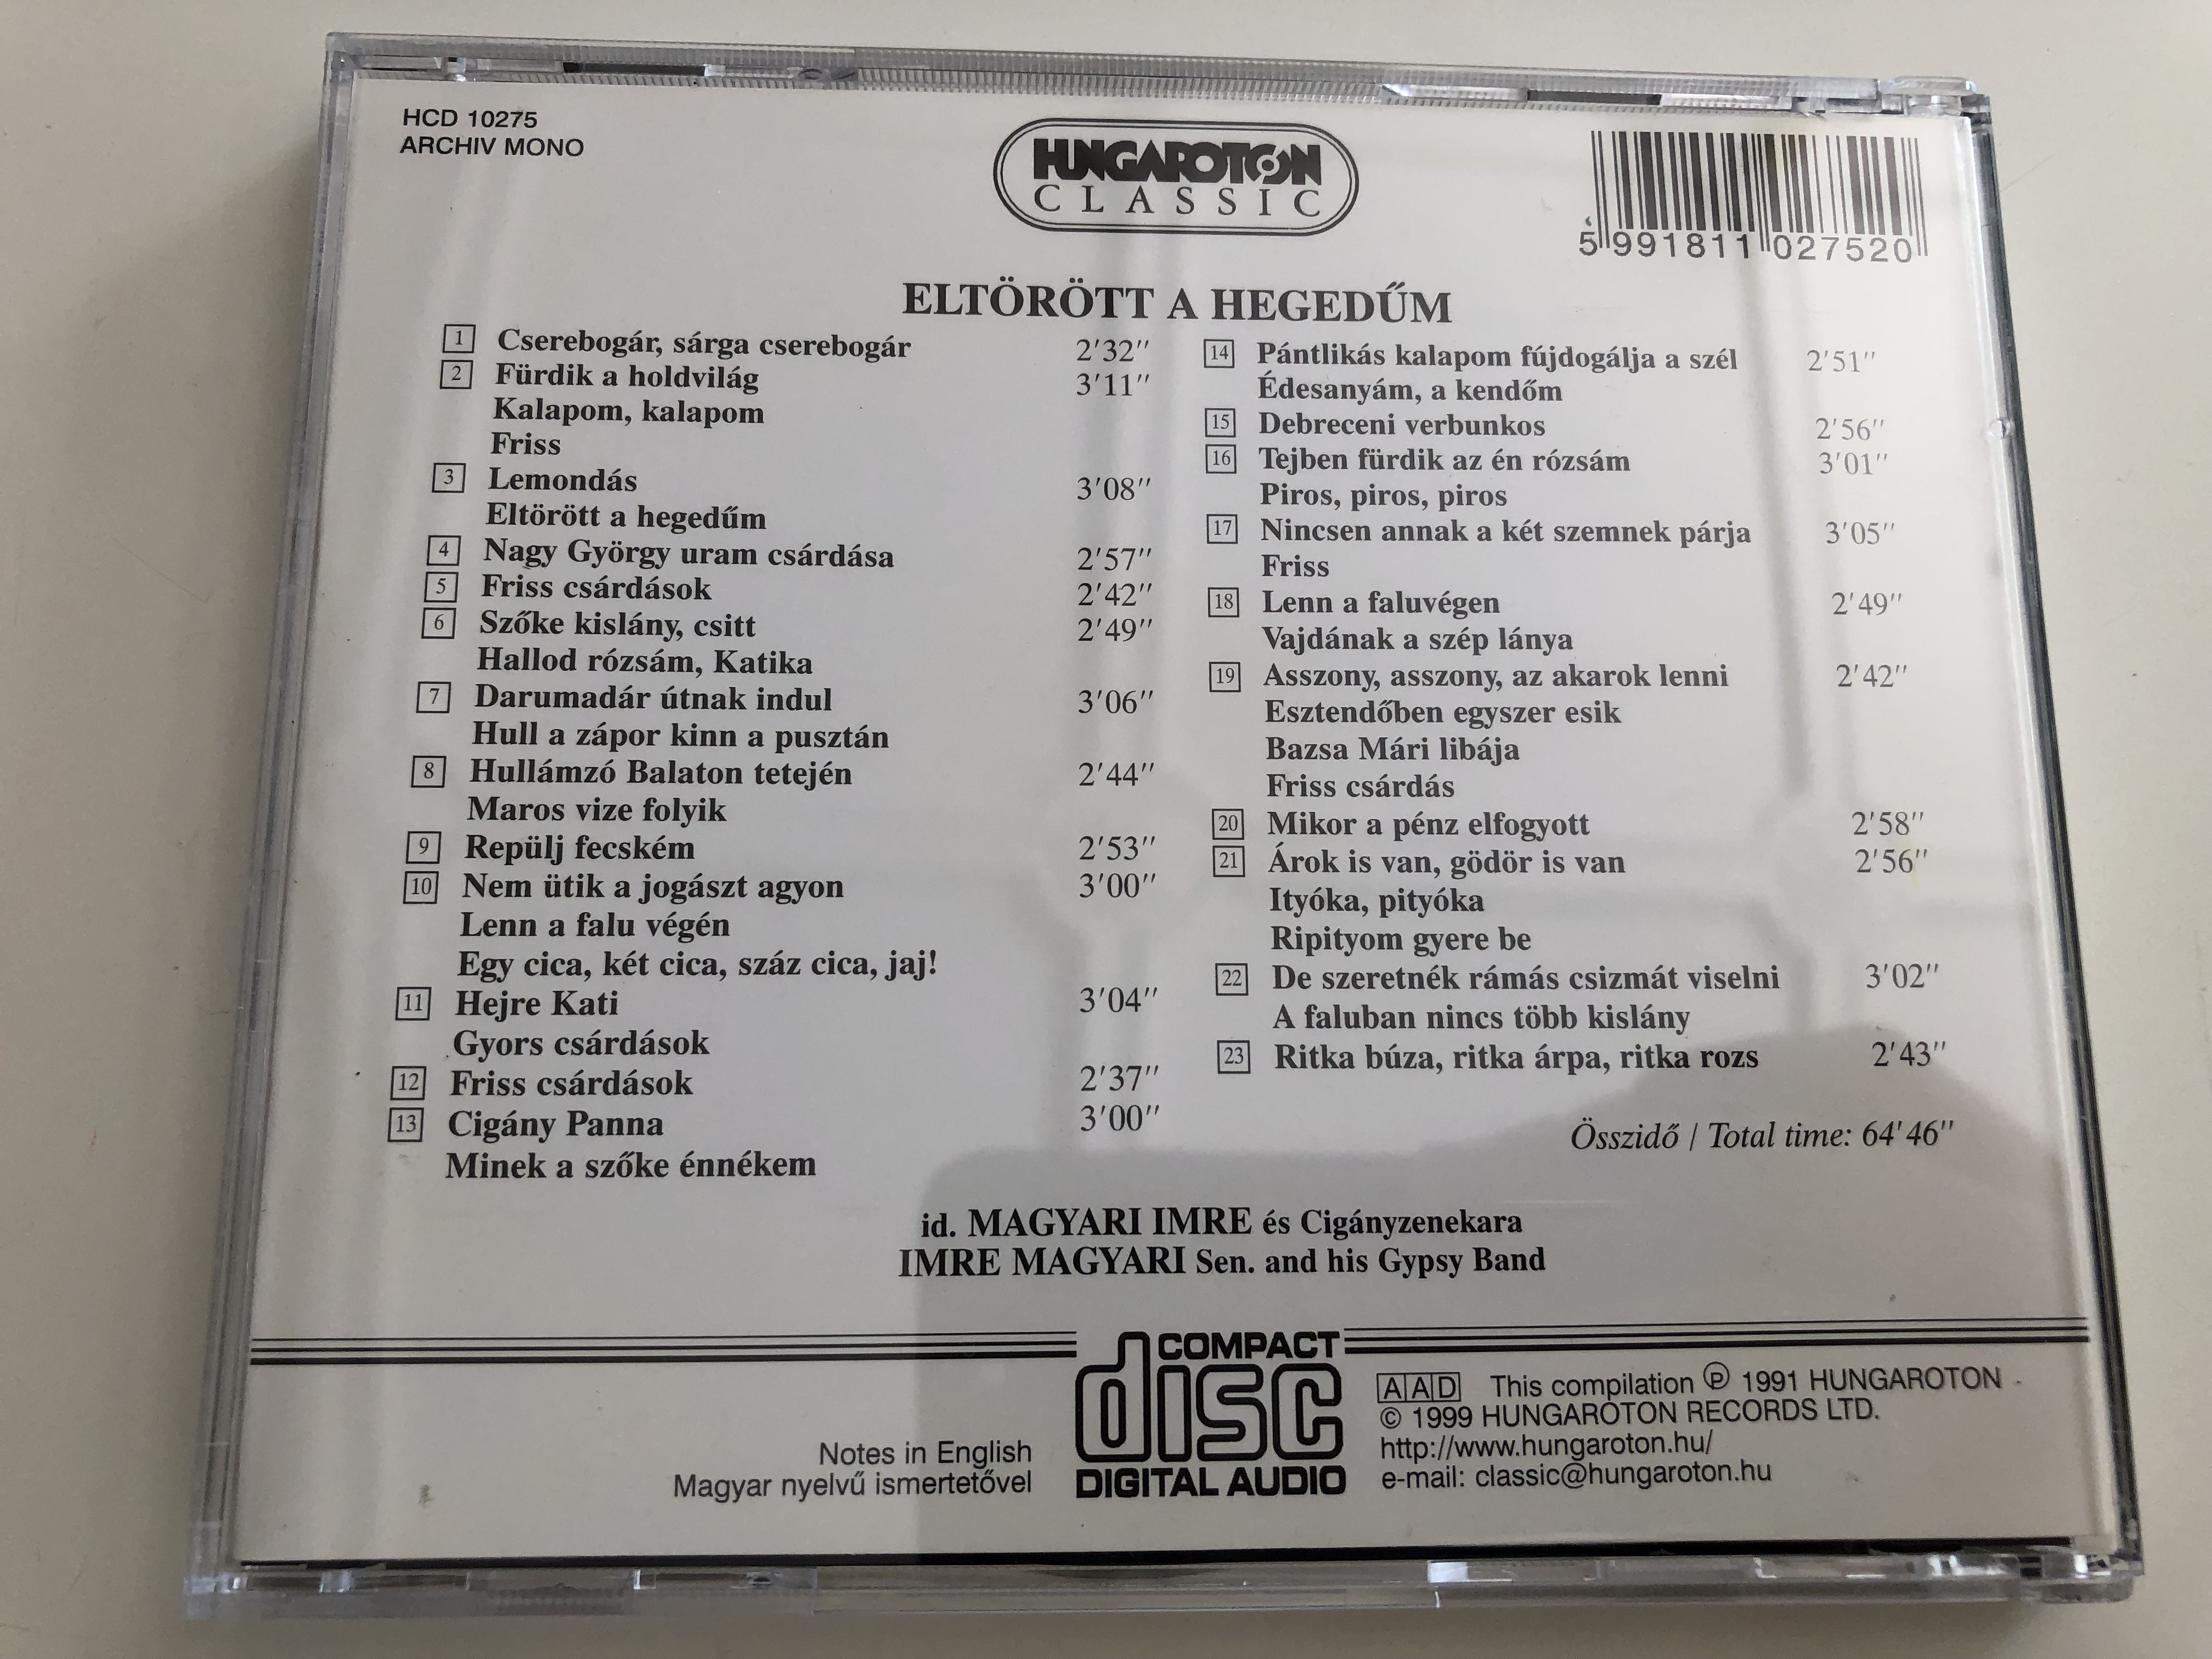 elt-r-tt-a-heged-m-id.-magyari-imre-s-cig-nyzenekara-v-logat-s-arch-v-felv-telekb-l-imre-magyari-senior-and-his-gypsy-band-archive-recordings-hungaroton-classic-audio-cd-1999-hcd-10275-6-.jpg